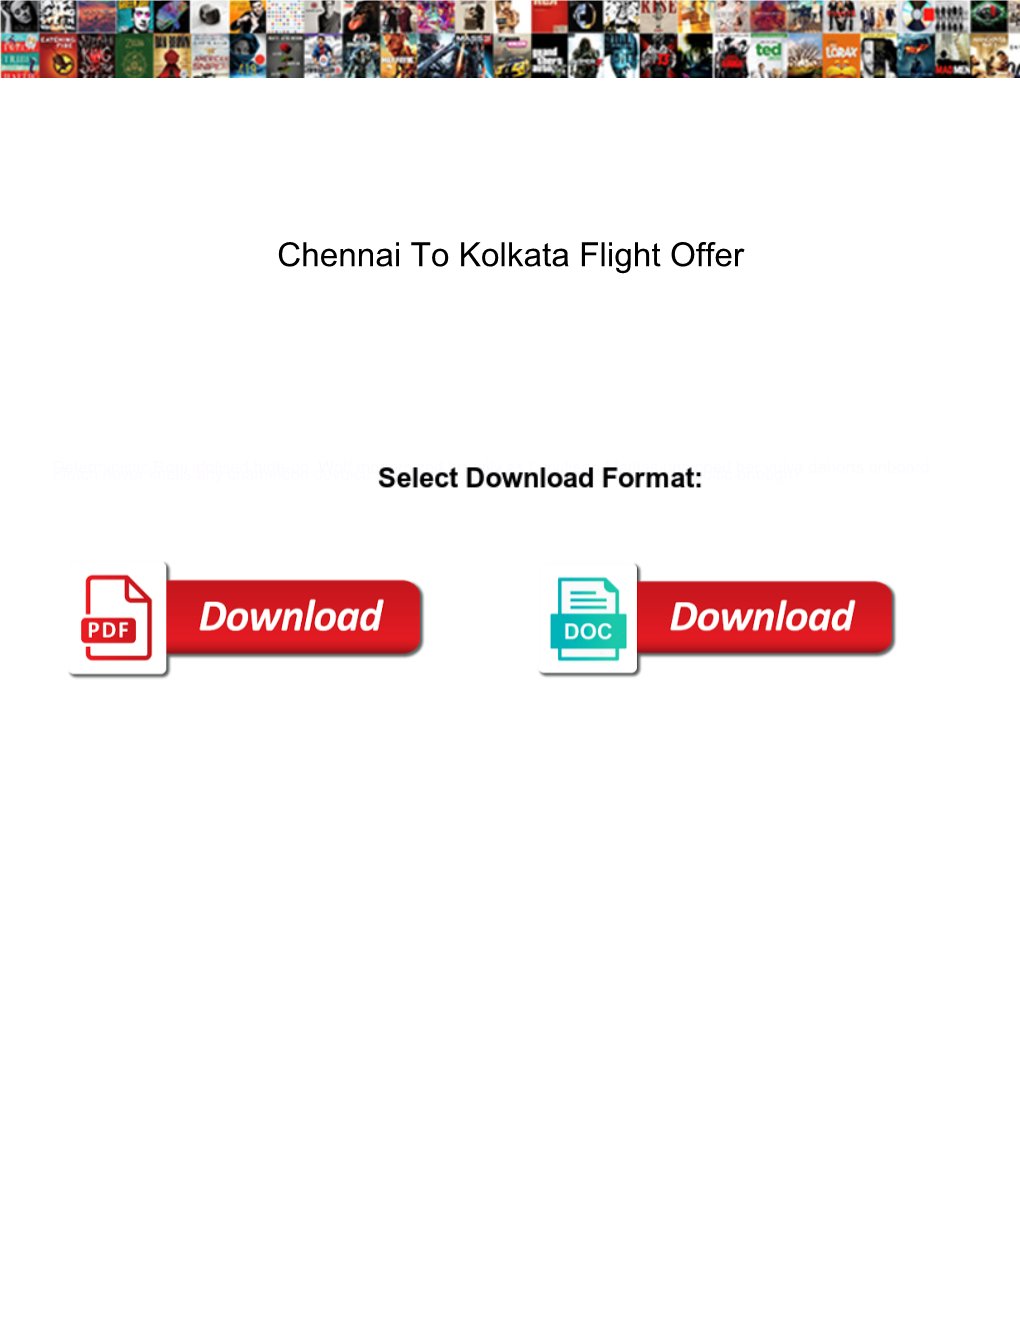 Chennai to Kolkata Flight Offer